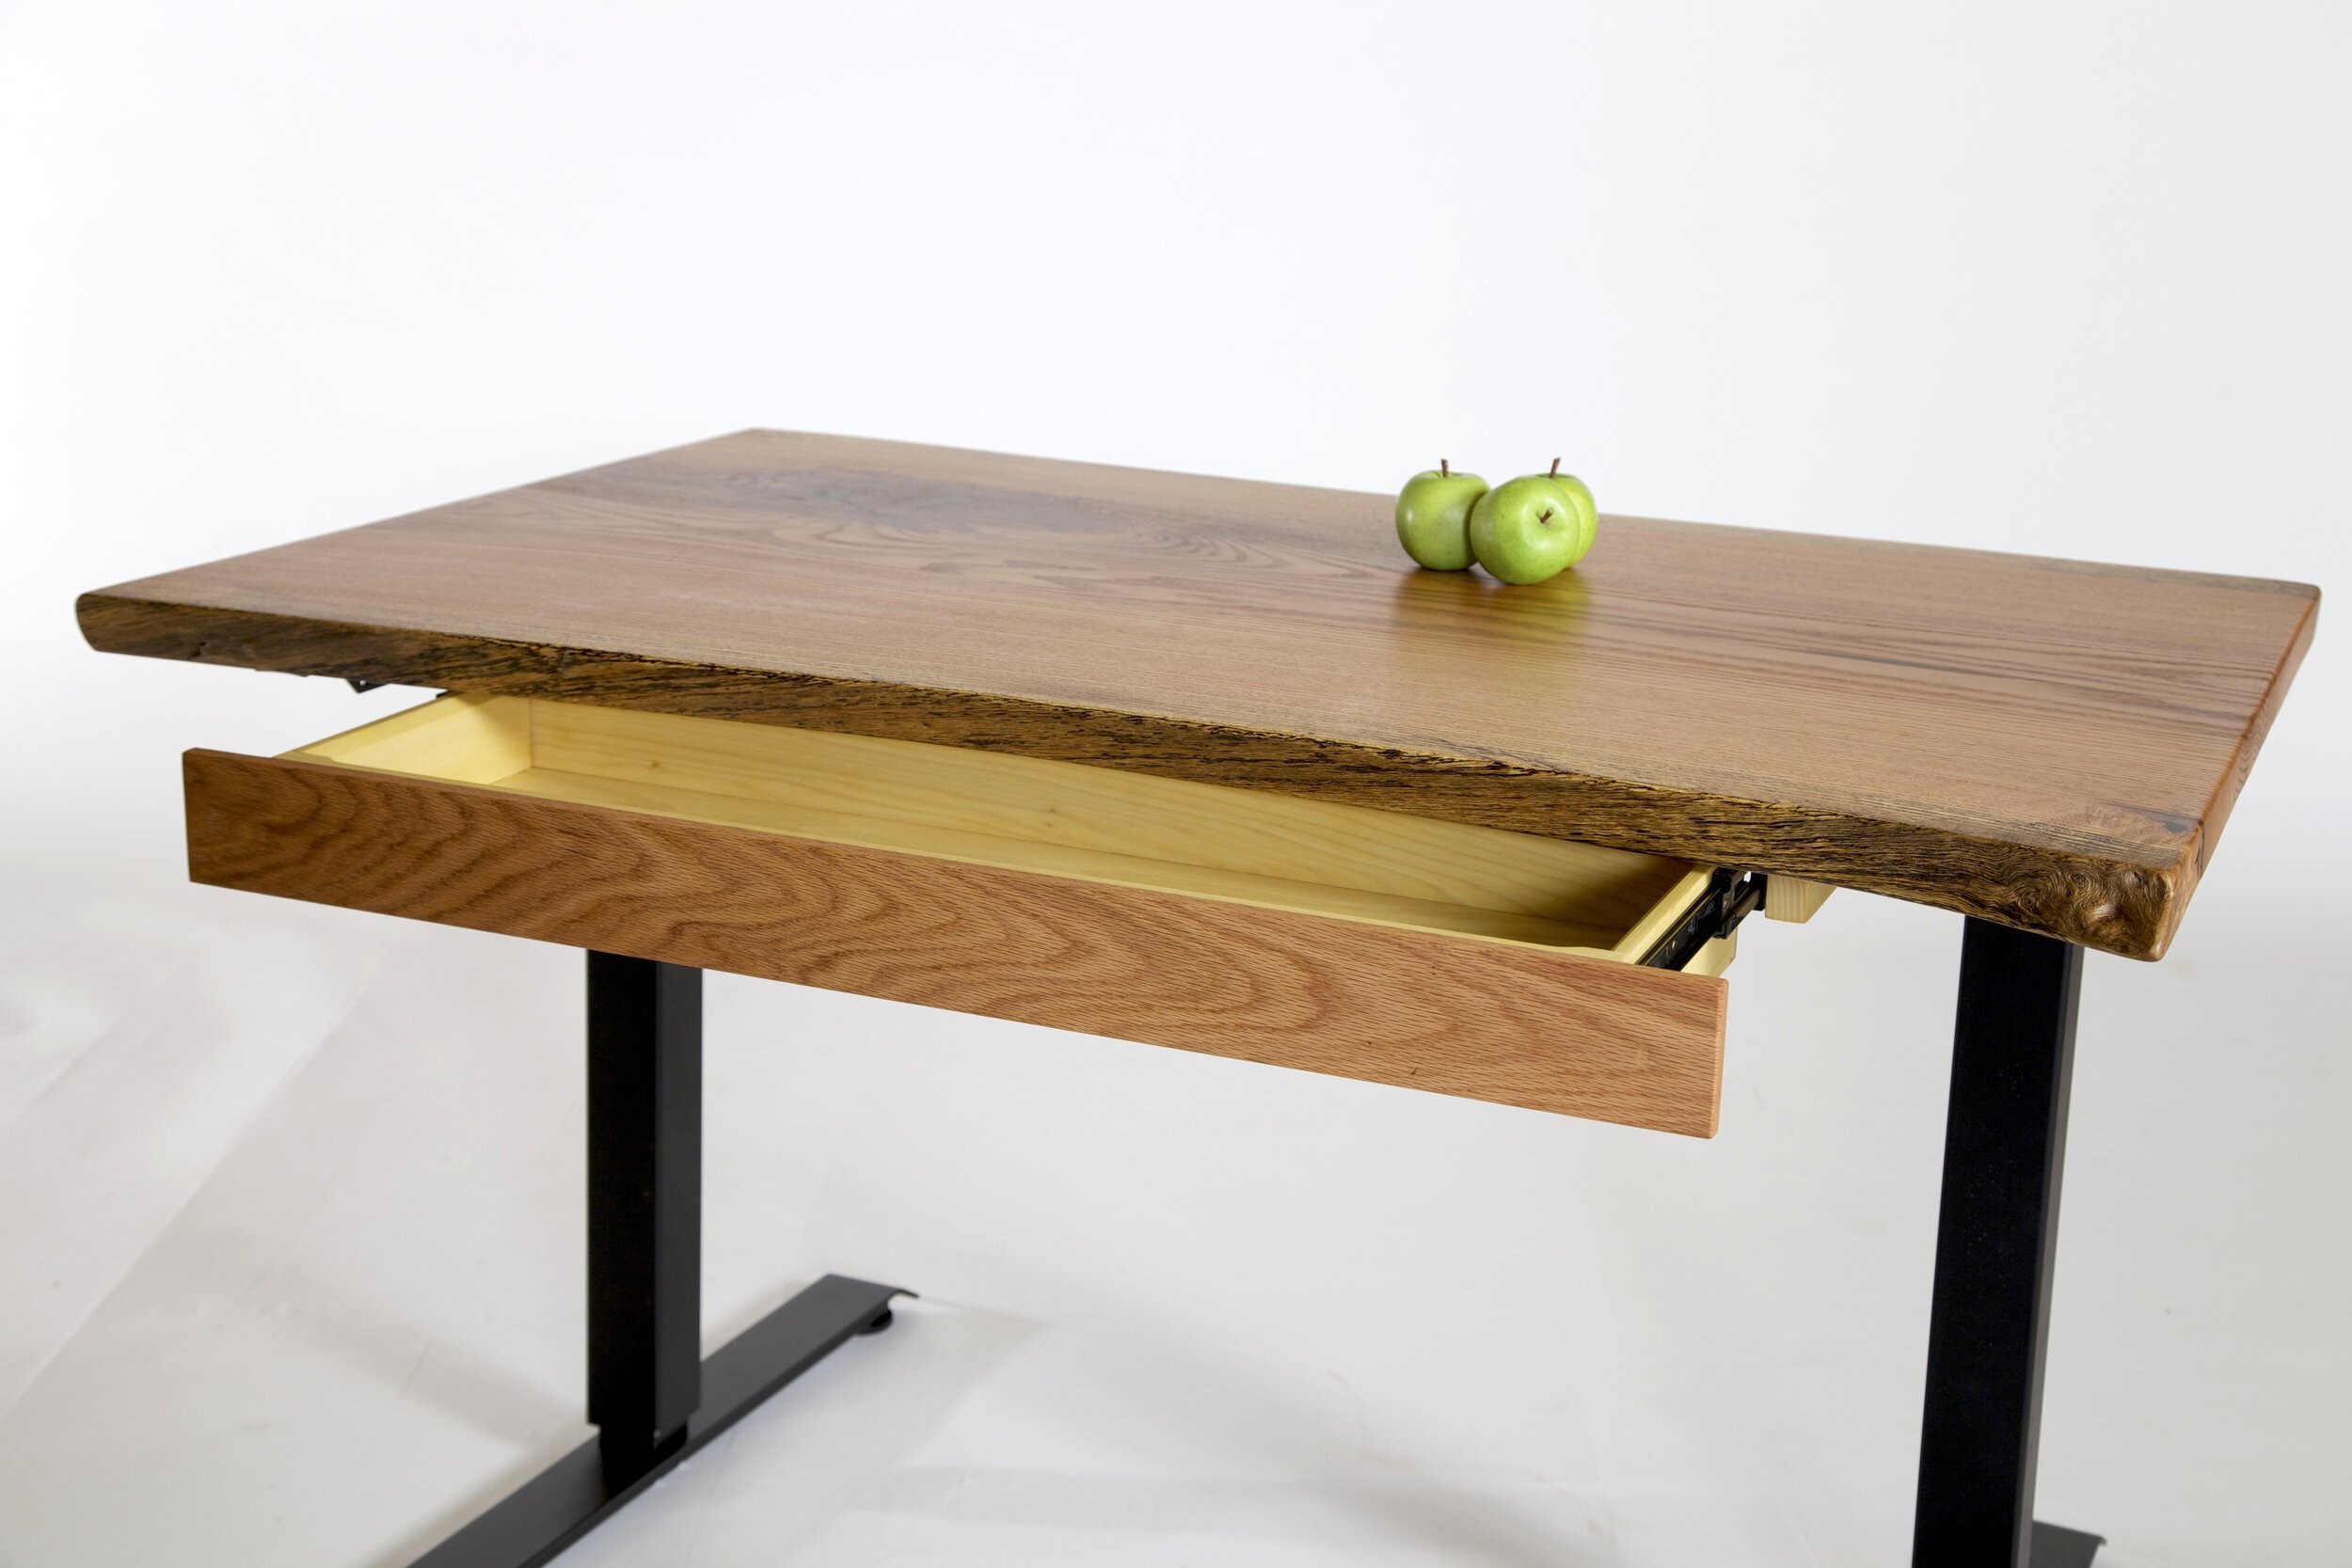 Adjustable Height Desk in oak